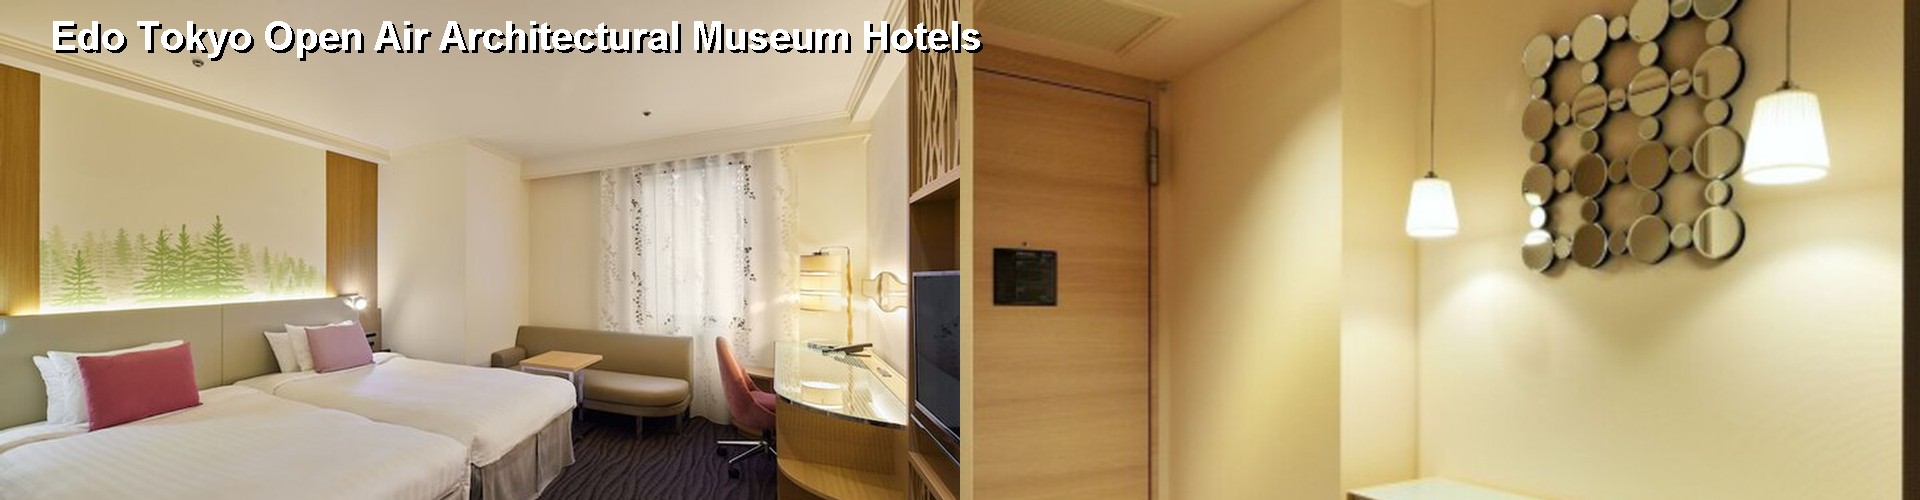 5 Best Hotels near Edo Tokyo Open Air Architectural Museum